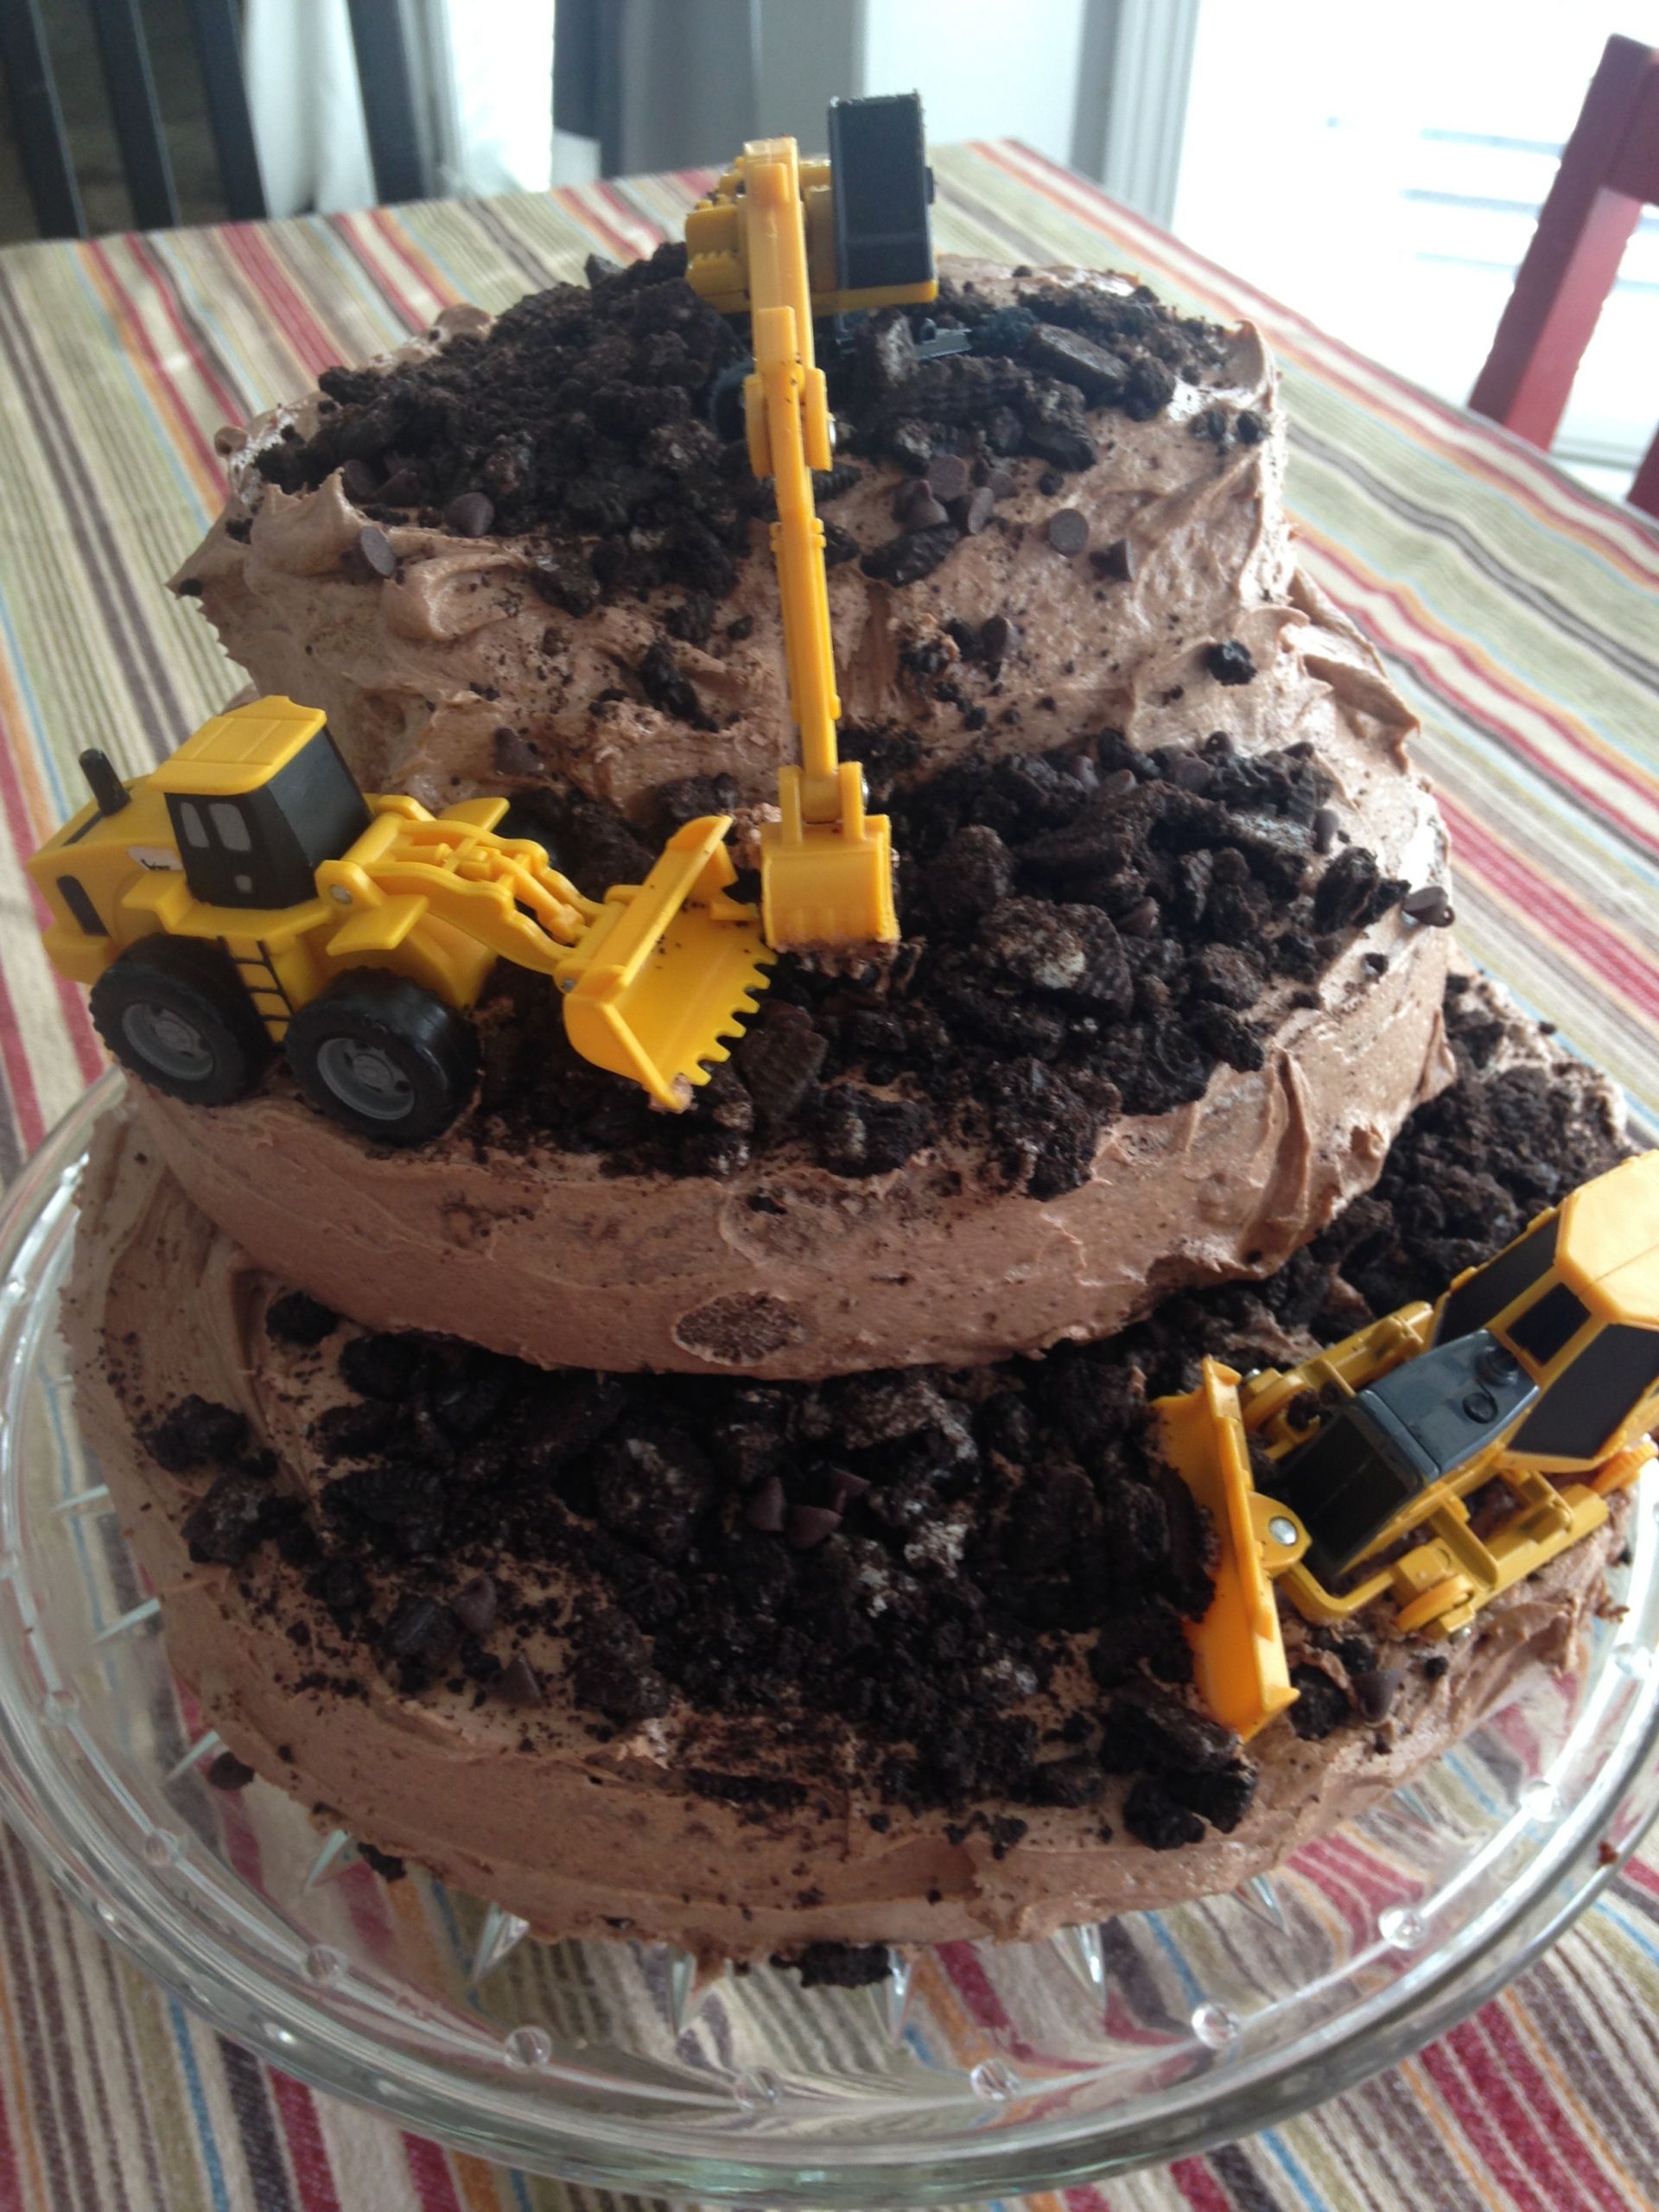 Construction Birthday Cakes
 Bulldozer Construction Birthday Cake